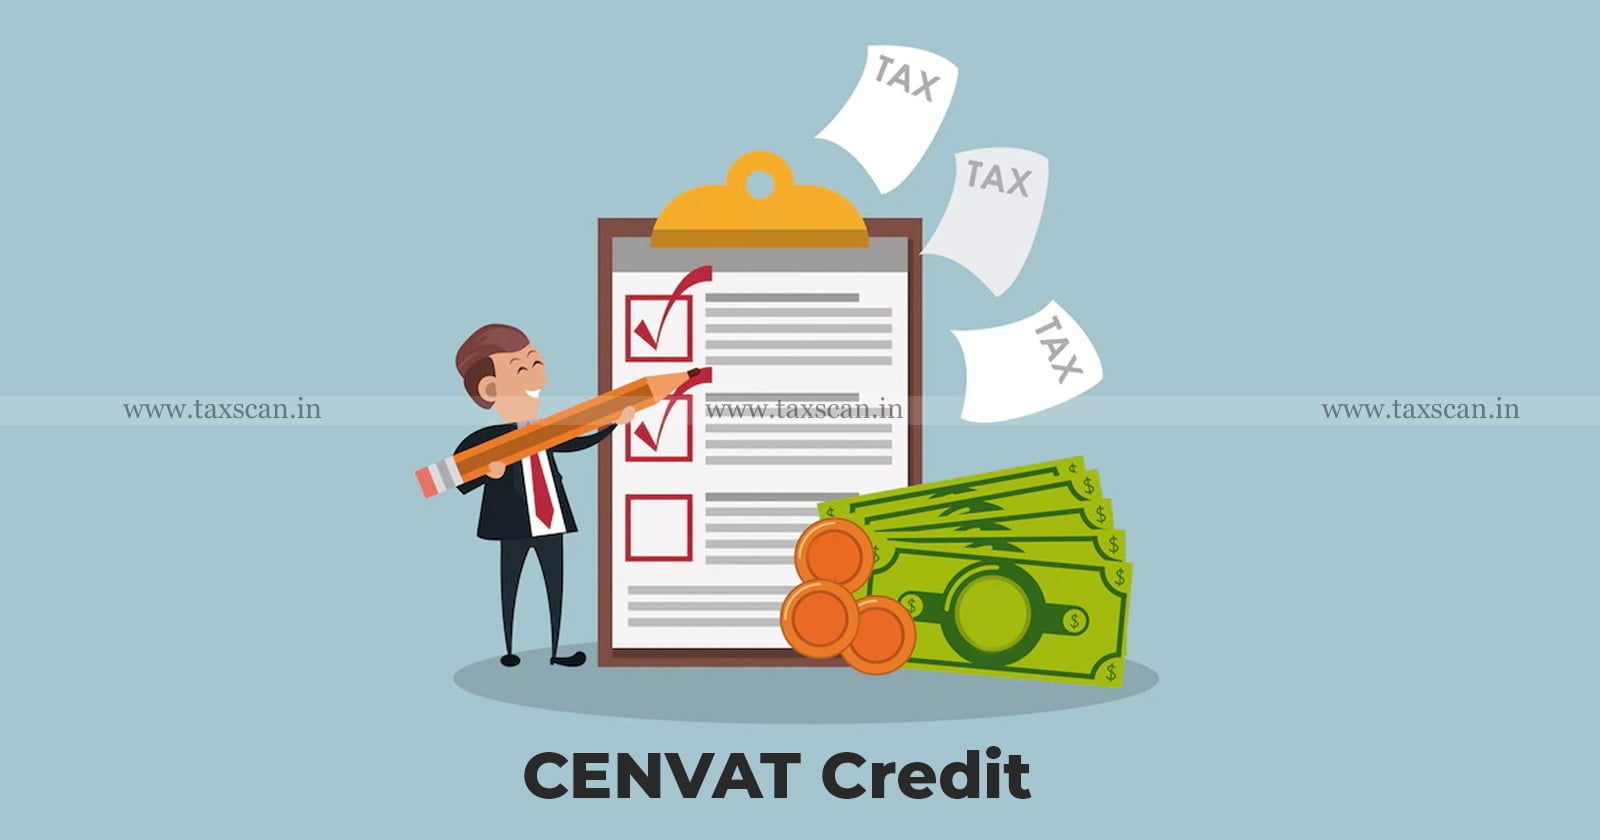 CENVAT Credit of Excise Duty - CENVAT Credit - Excise Duty - 5% of Value of Exempted Goods - CENVAT Credit Rules - CESTAT - taxscan